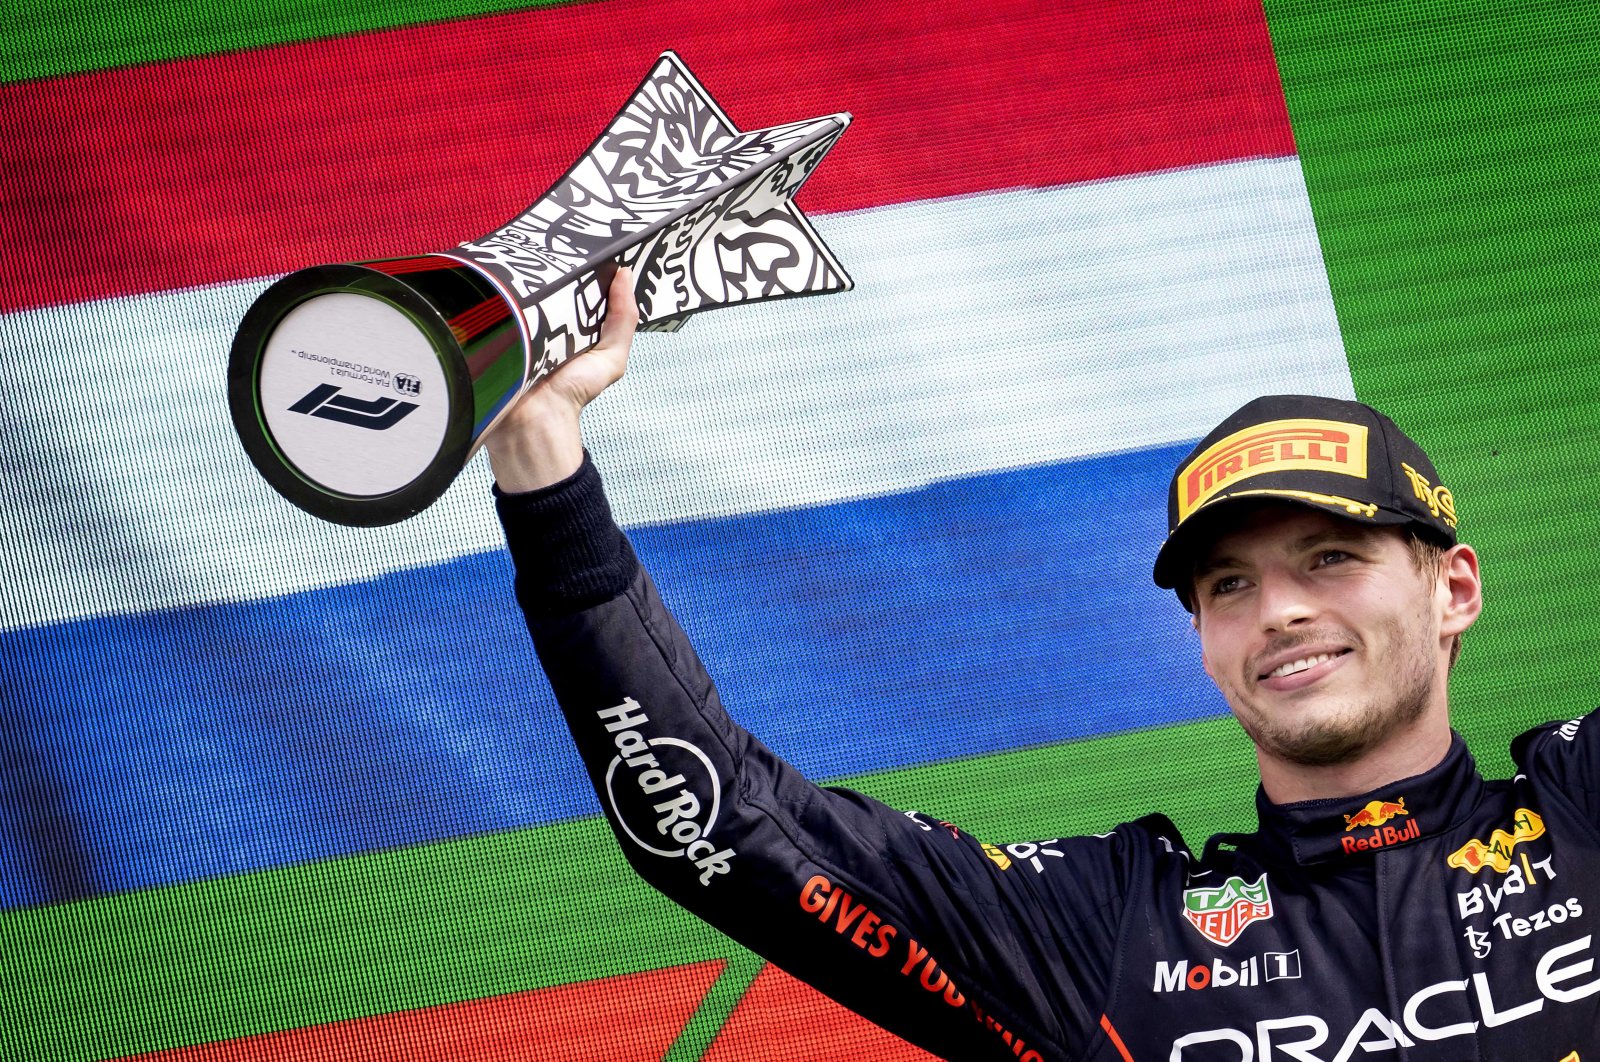 Dutch Formula One driver Max Verstappen of Red Bull Racing celebrates winning the Formula One Grand Prix of the Netherlands at the Zandvoort Circuit in Zandvoort, Netherlands, Sept. 4, 2022.  (EPA Photo)